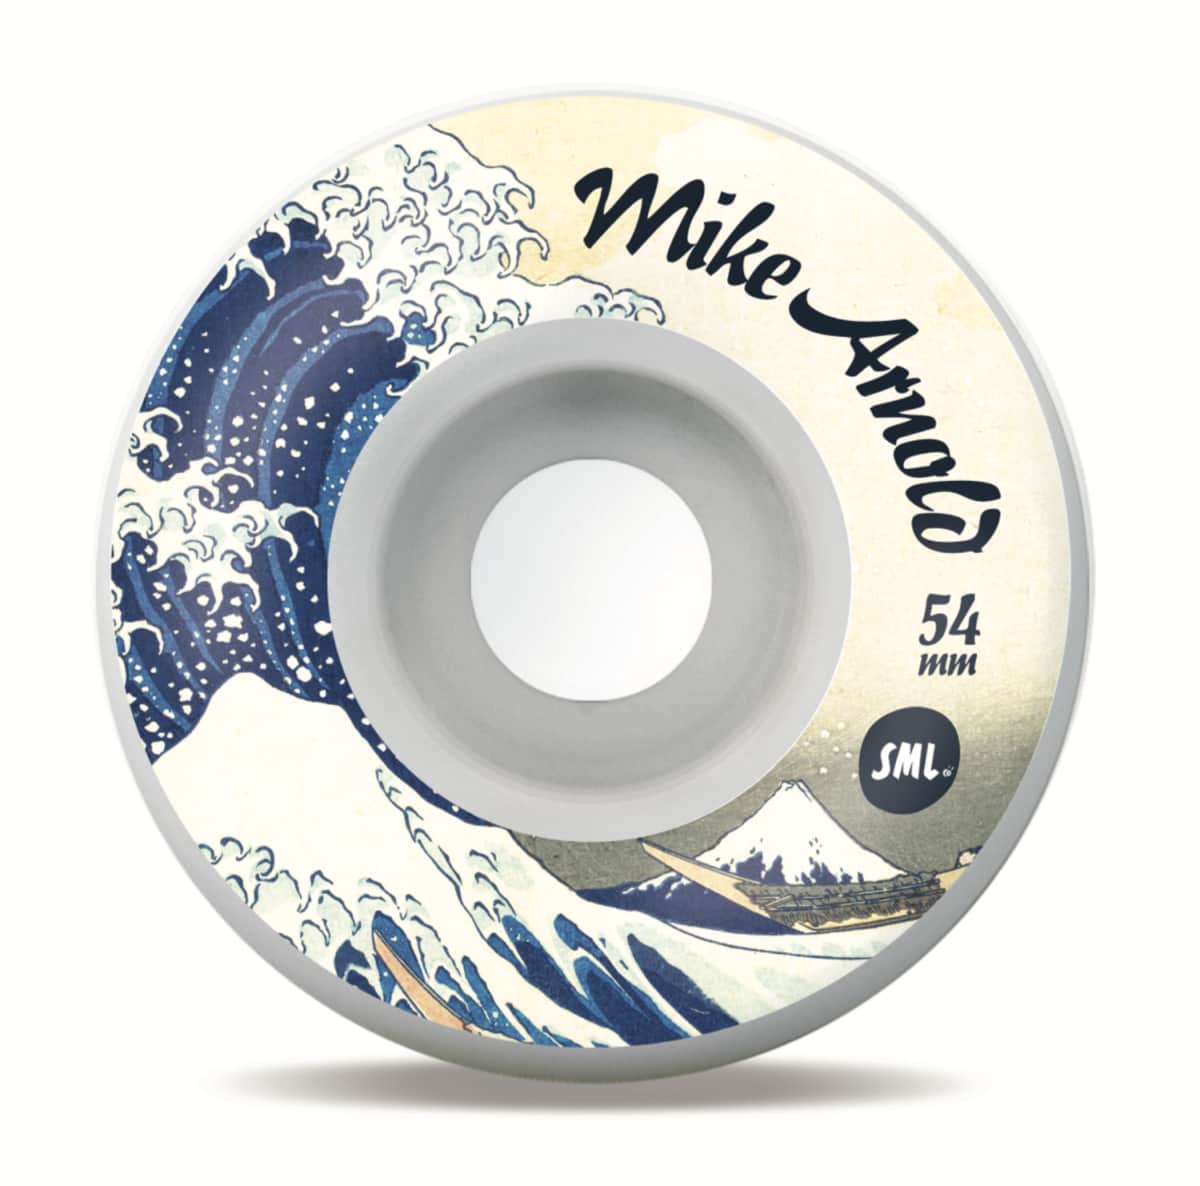 SML WHEELS - MIKE ARNOLD BIG WAVES V-CUT CONICAL SHAPE 99A (54MM) - The Drive Skateshop